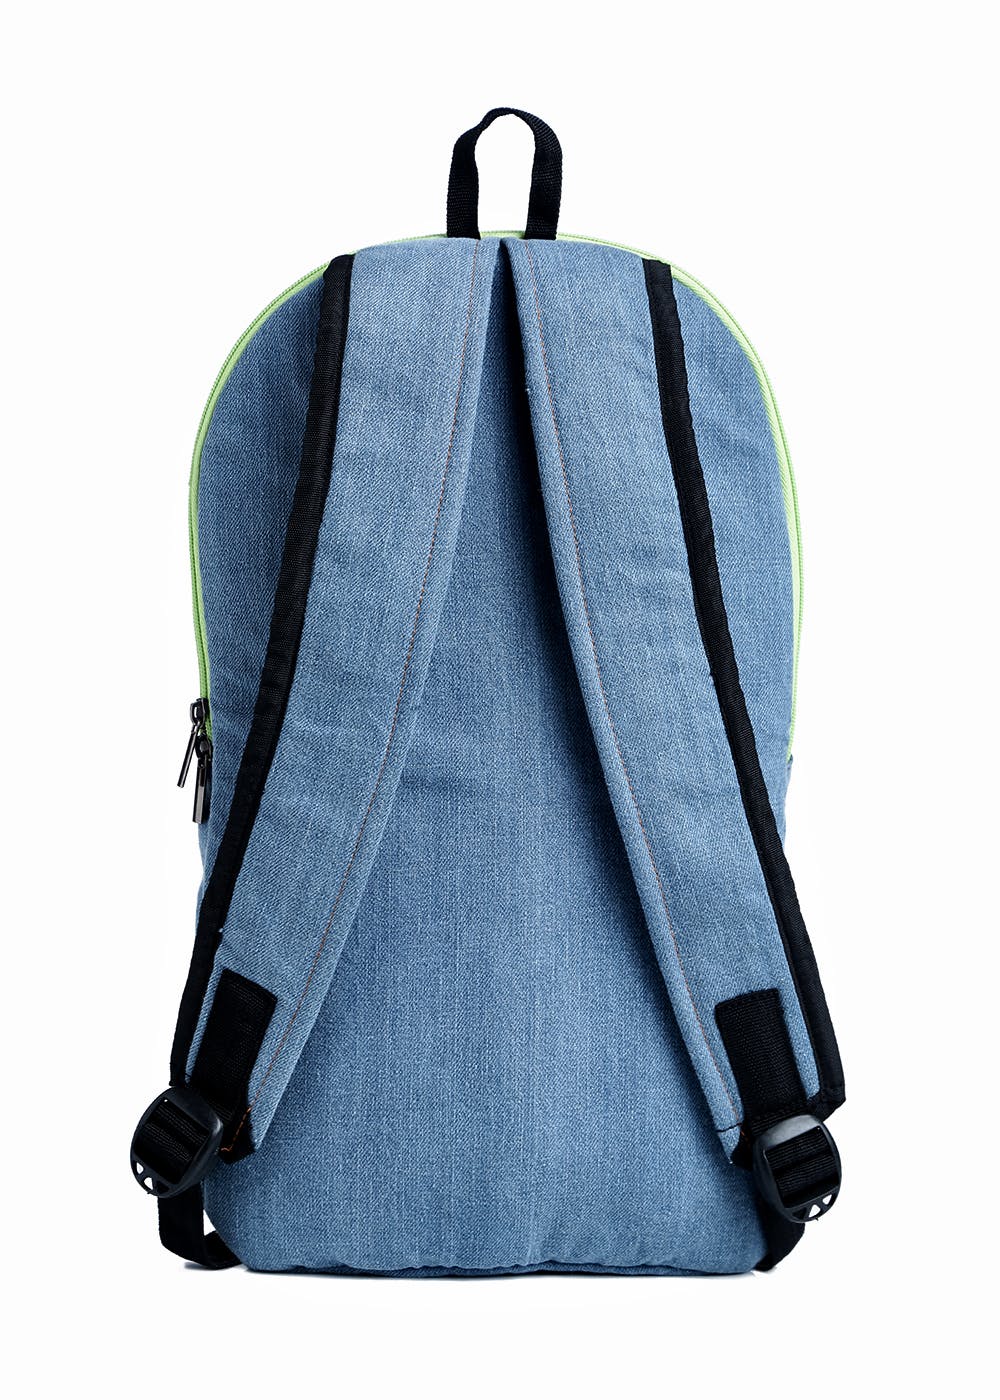 Topper Denim Casual Backpack  School Bag  College Bag  Laptop Bag for  BoysGirls  MenWomen 20 ltrs  Navy Blue 20 L Backpack Denim Blue   Price in India  Flipkartcom